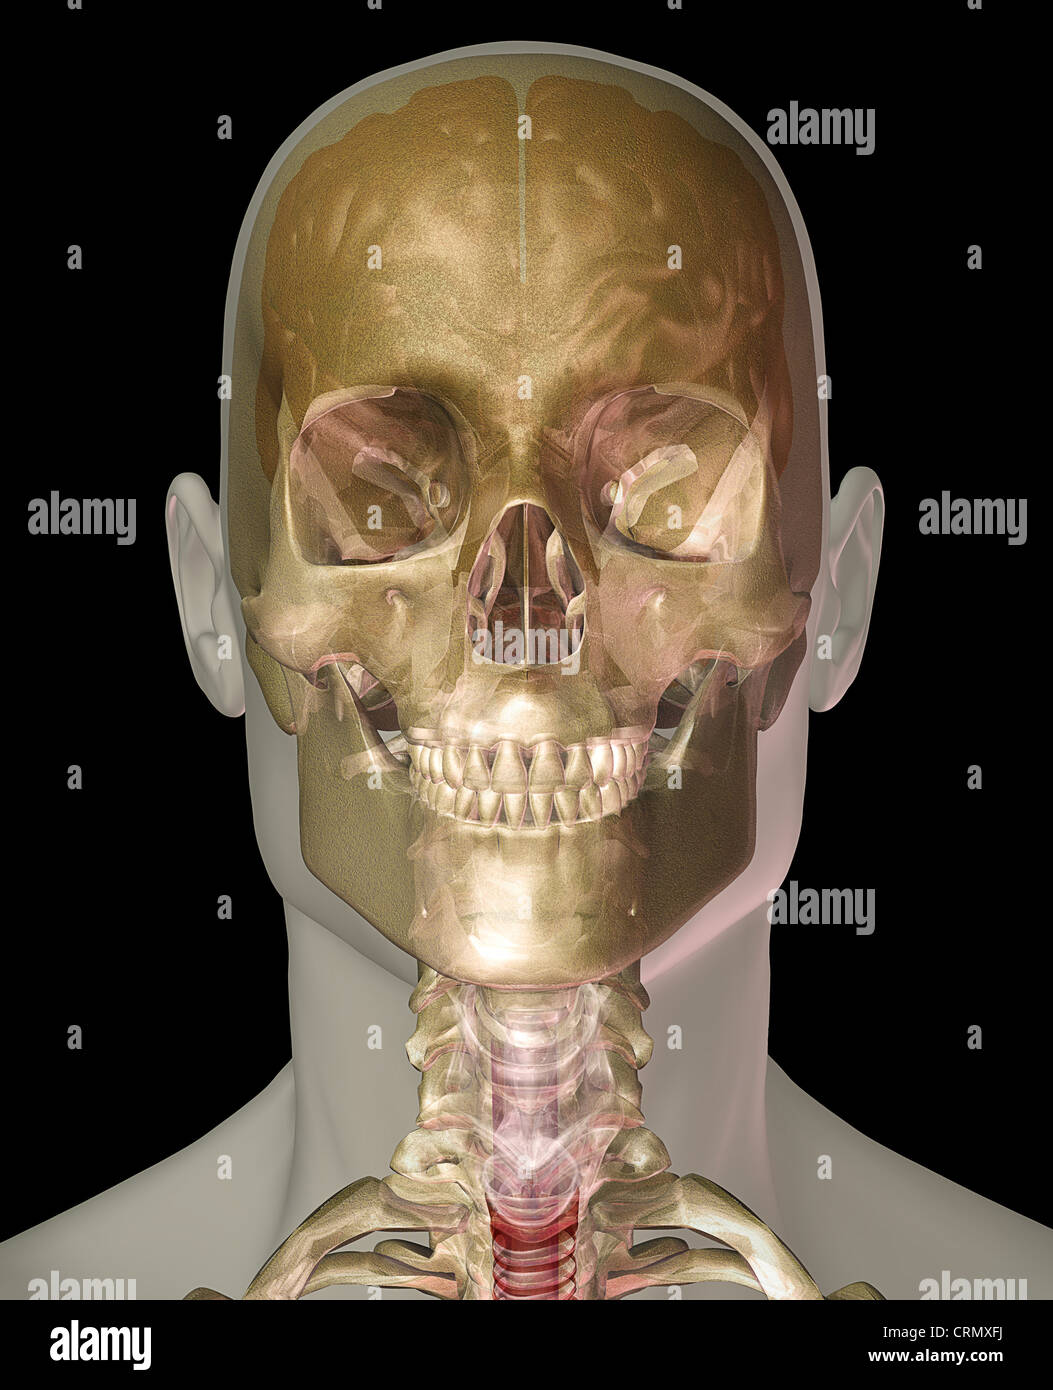 Human head anatomy showing the brain and skull Stock Photo